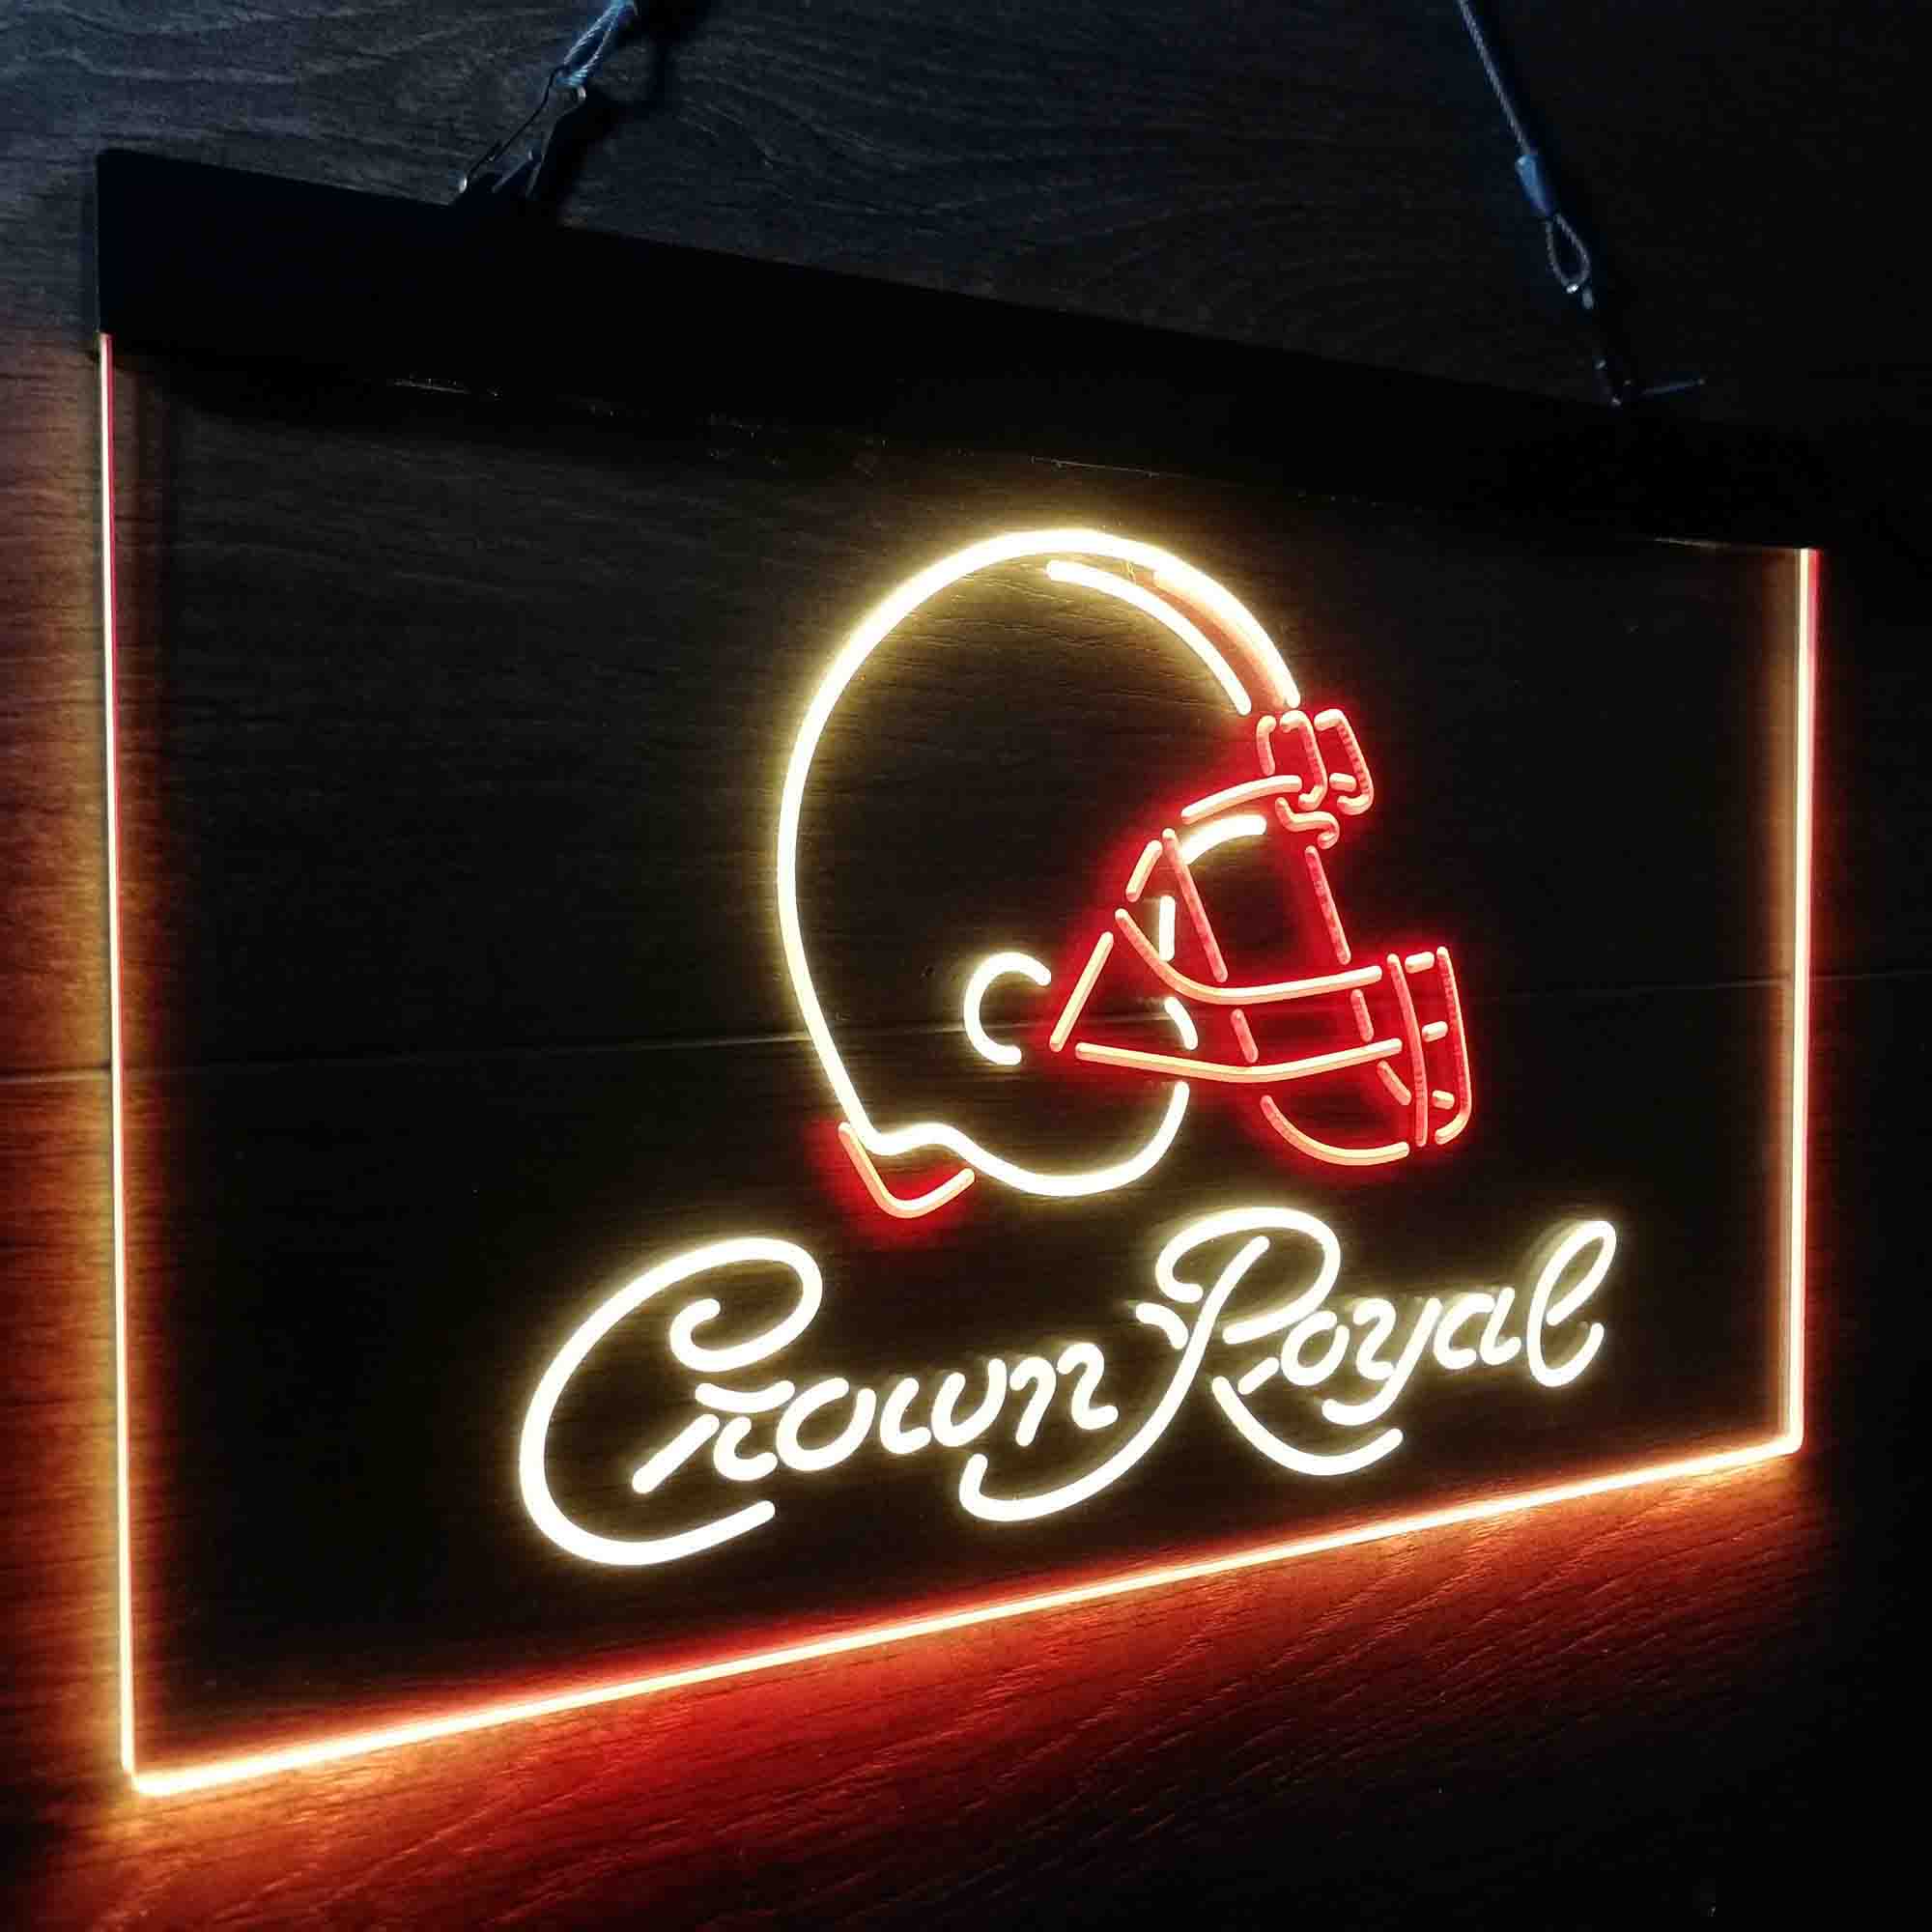 Cleveland Browns Crown Royal Bar Neon-Like LED Sign - ProLedSign